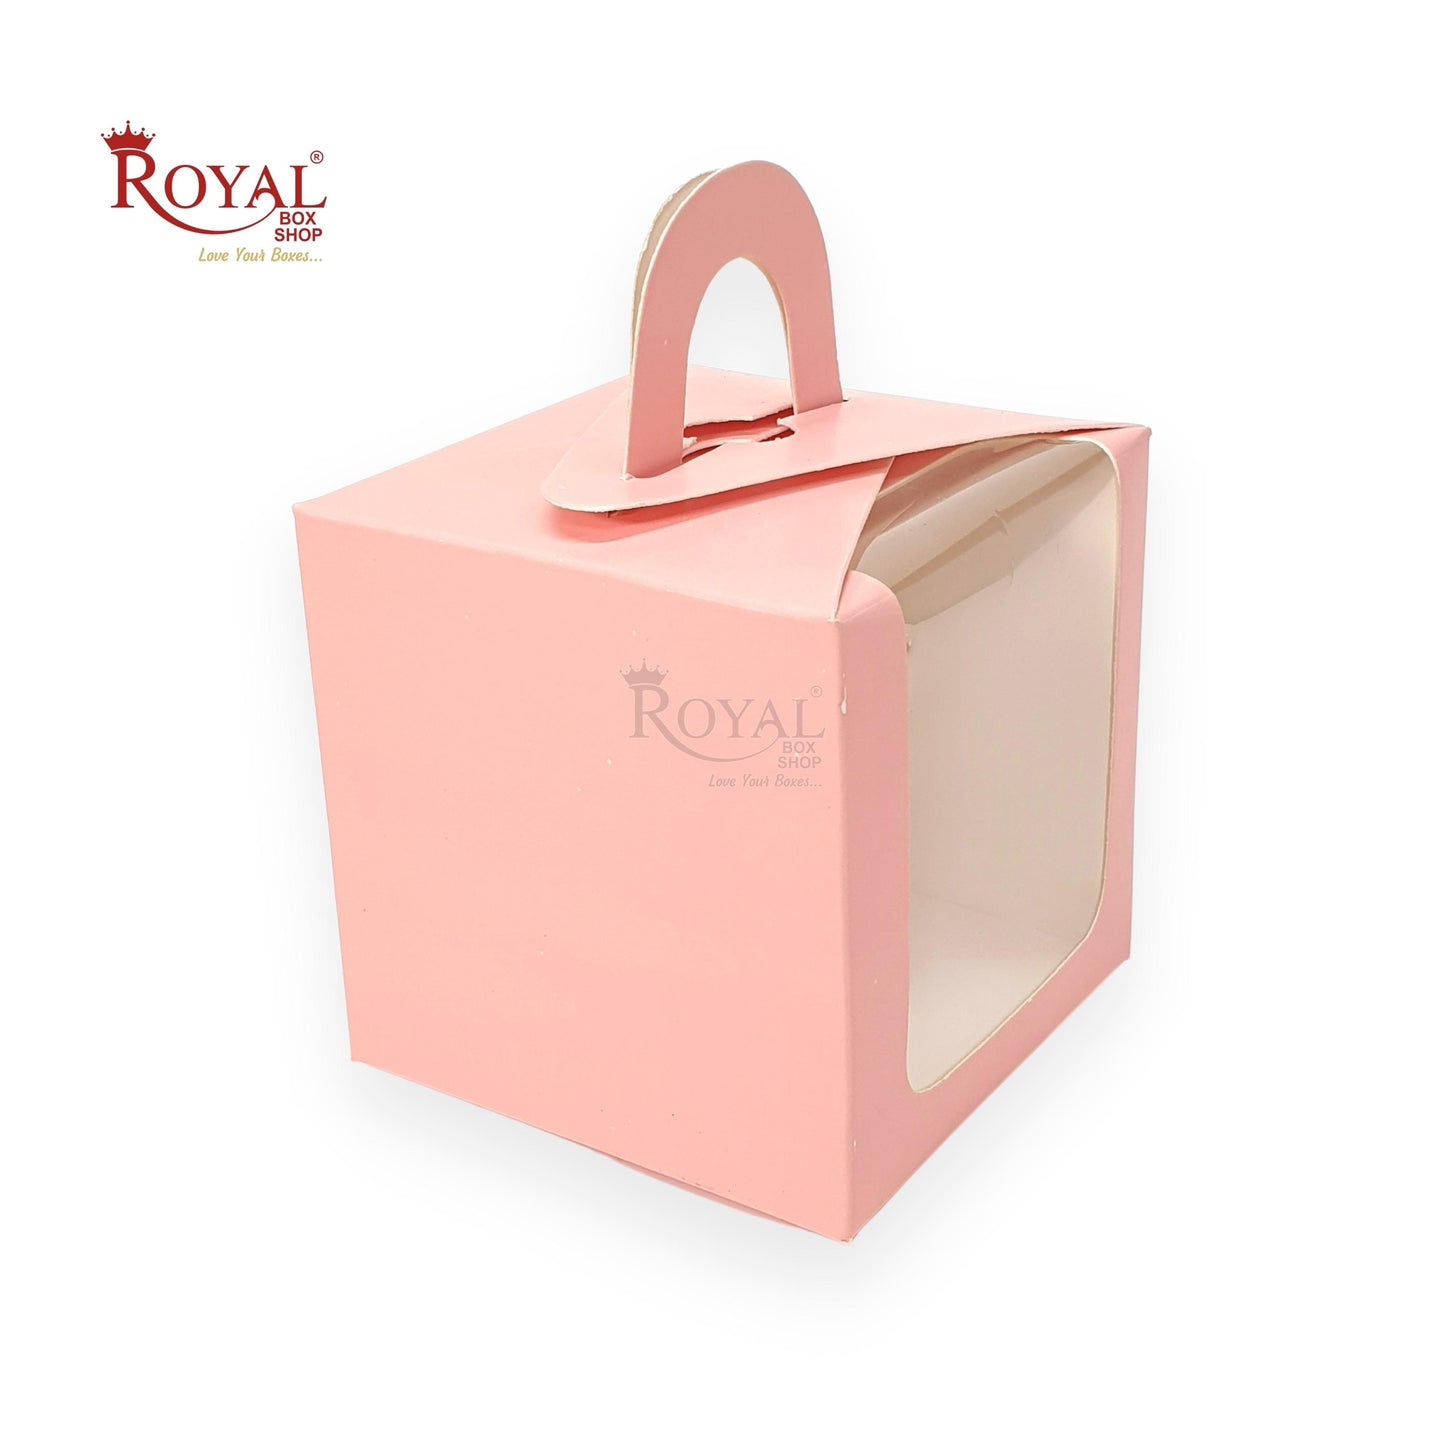 1 Cupcake Box With Window - Size 3.5"x3.5"x3.5" - Pink